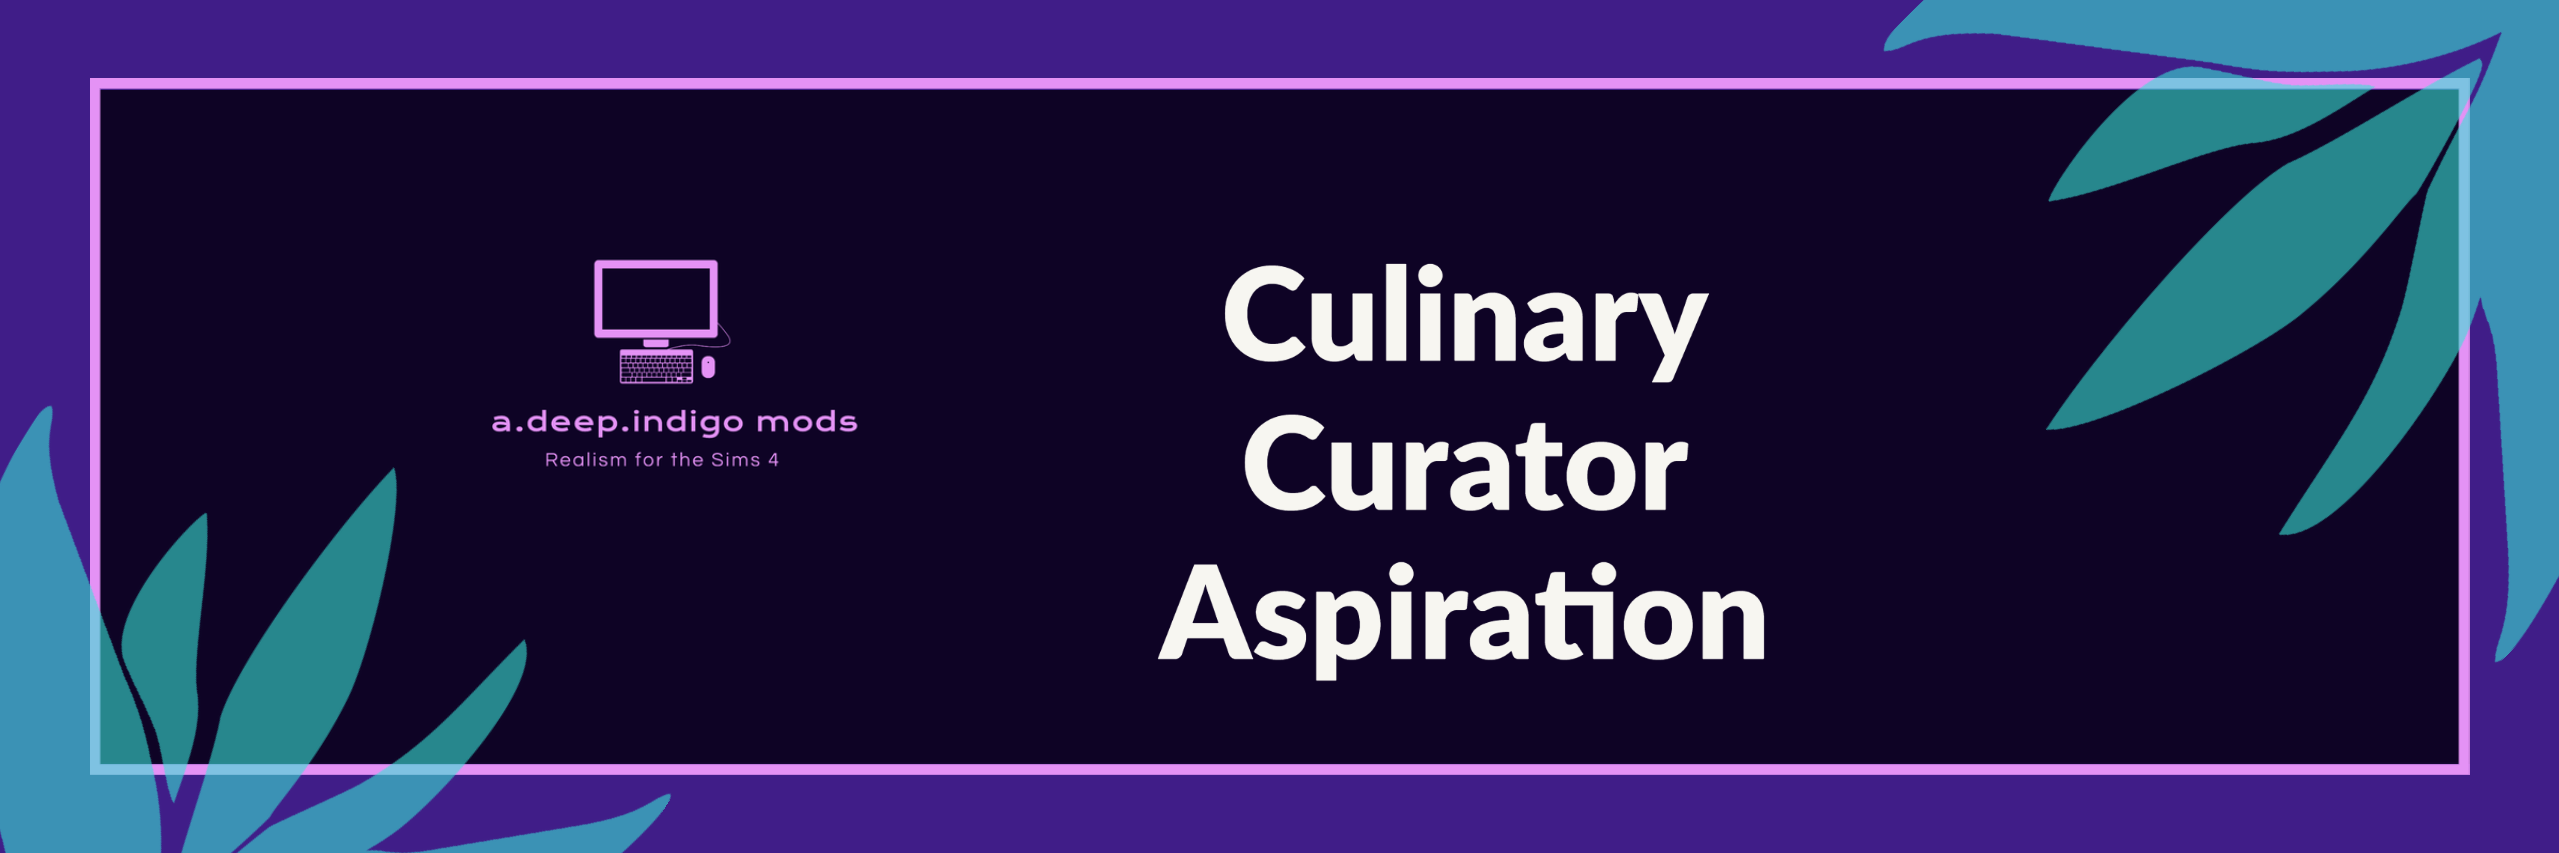 Culinary Curator Aspiration